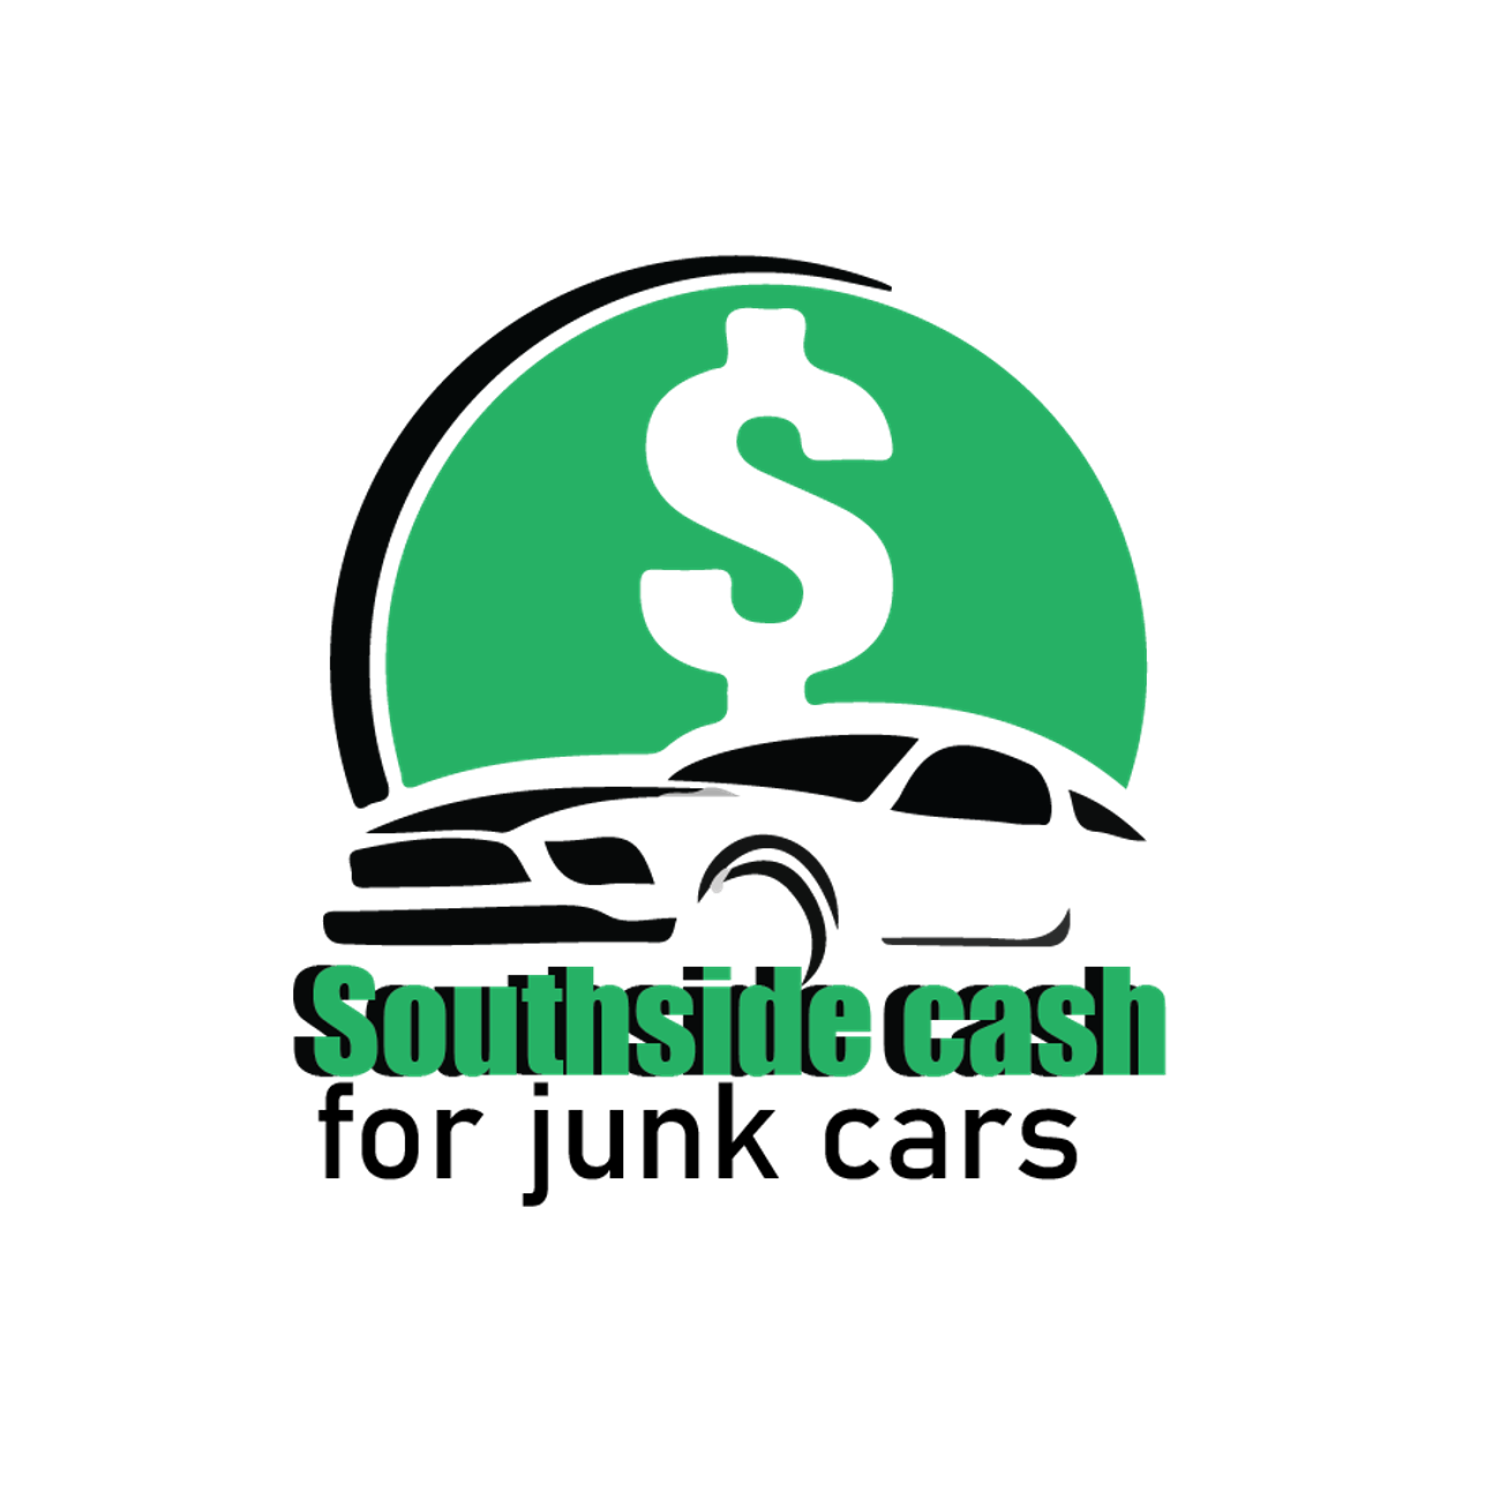 Southside cash for junk scrap cars removal